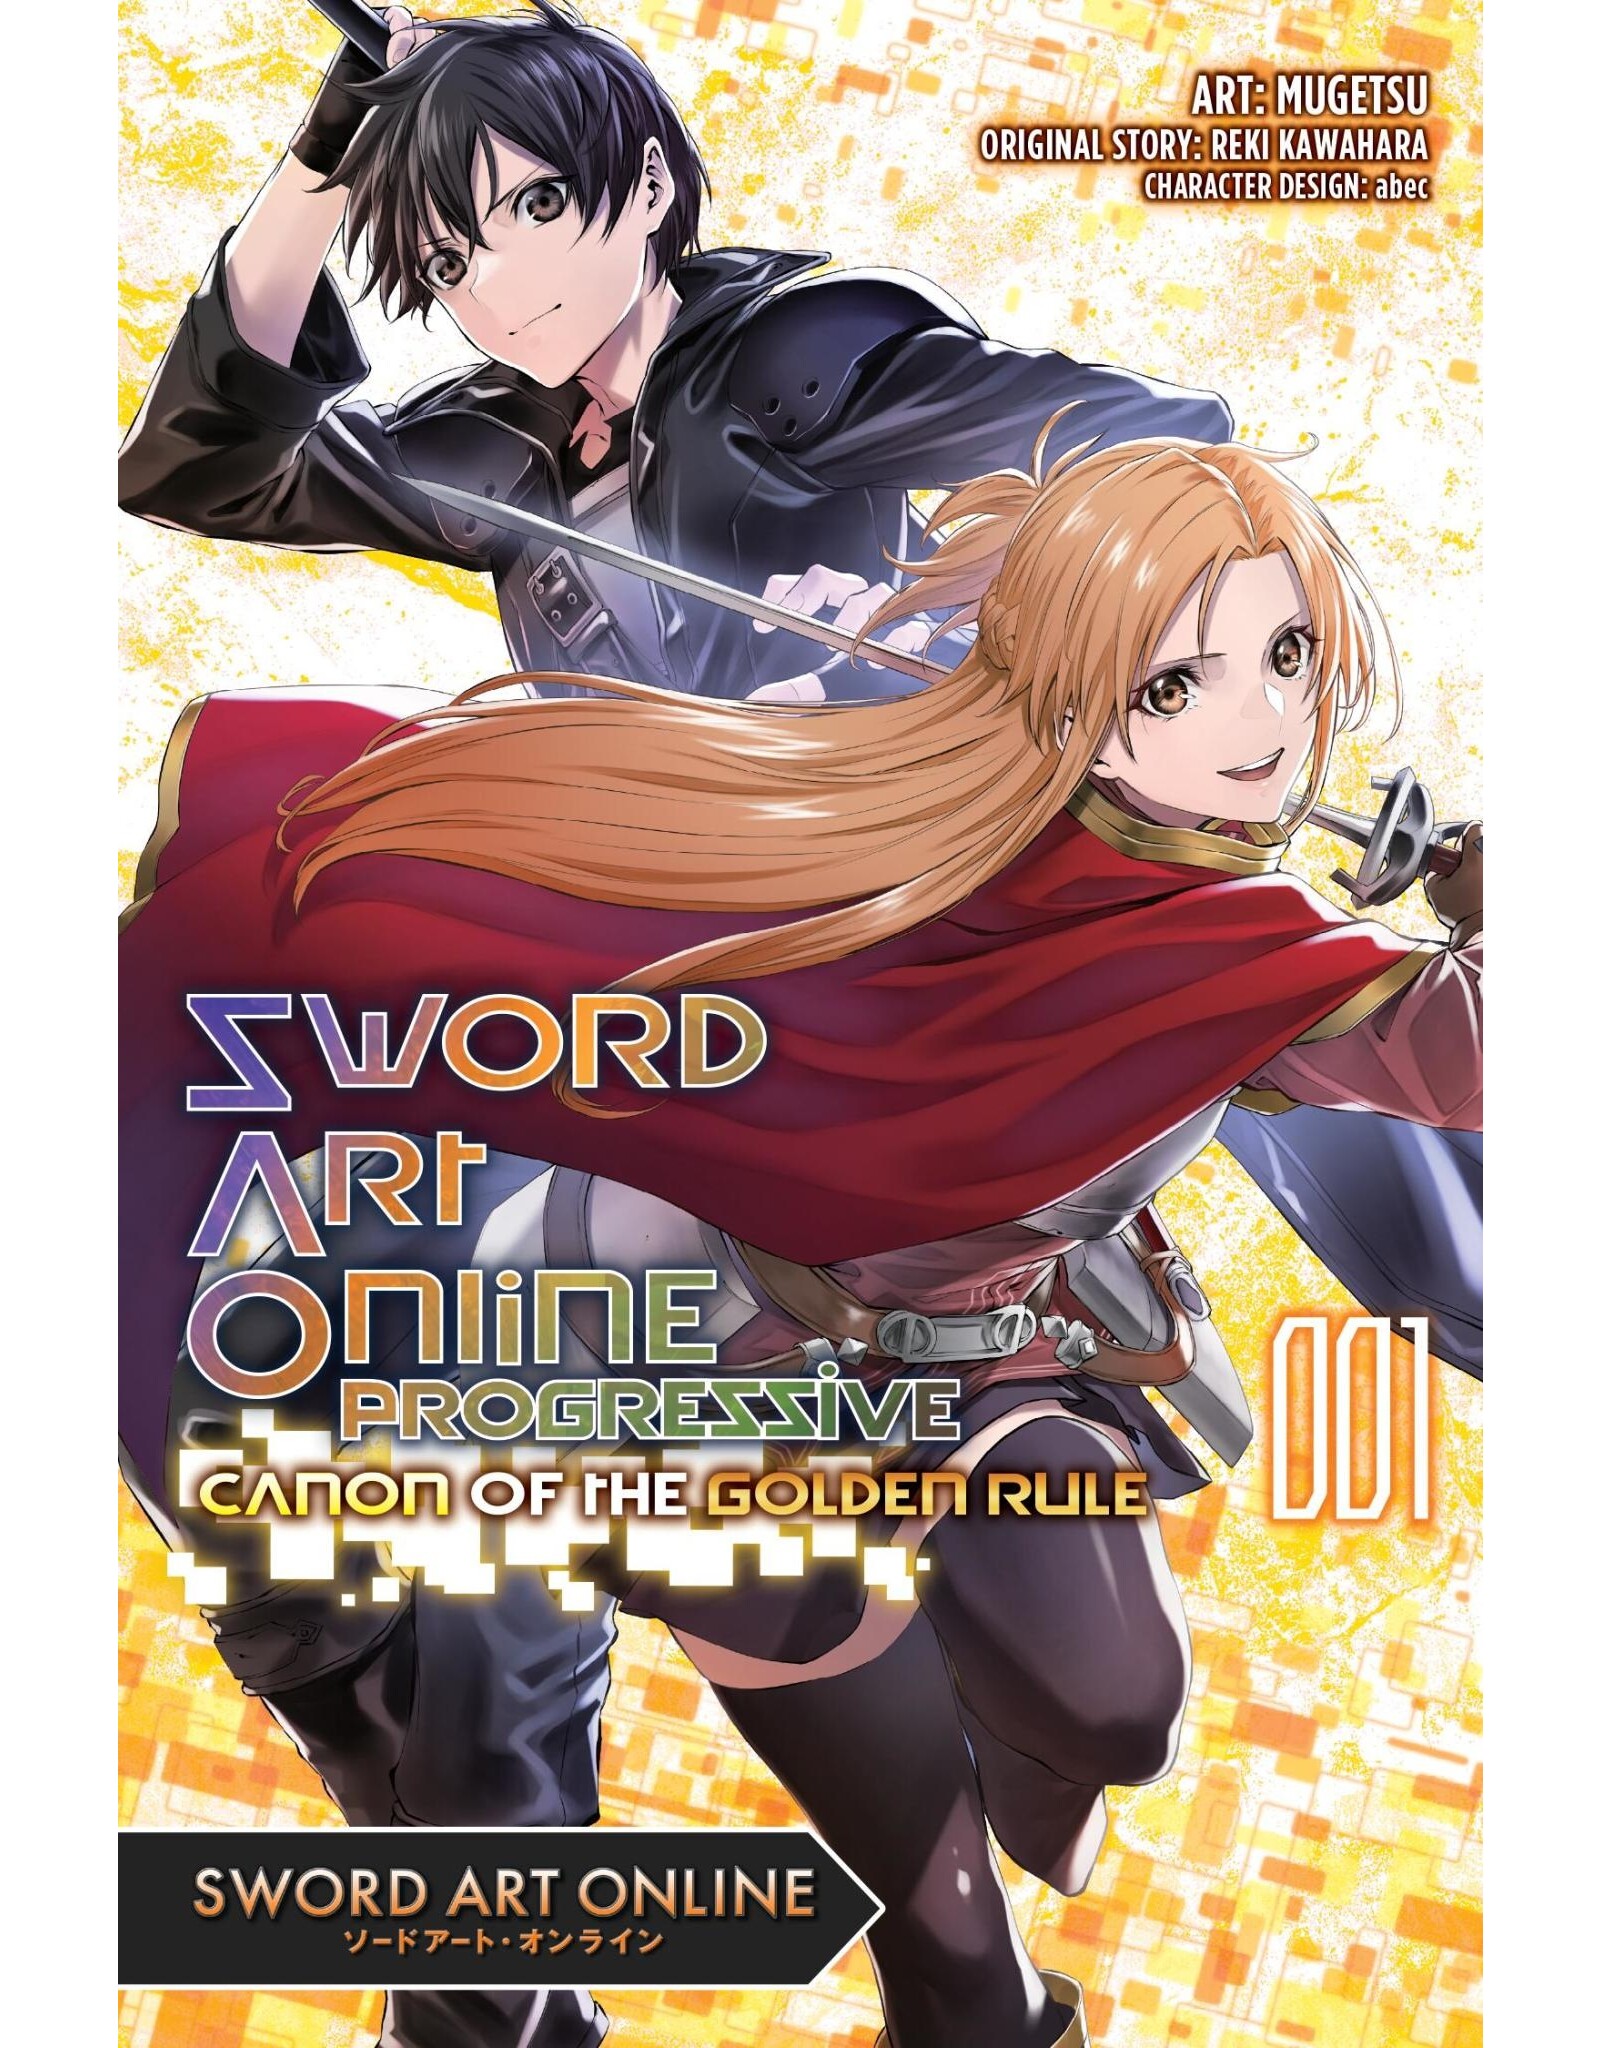 Sword Art Online Progressive Canon of the Golden Rule 001 (English) - Manga